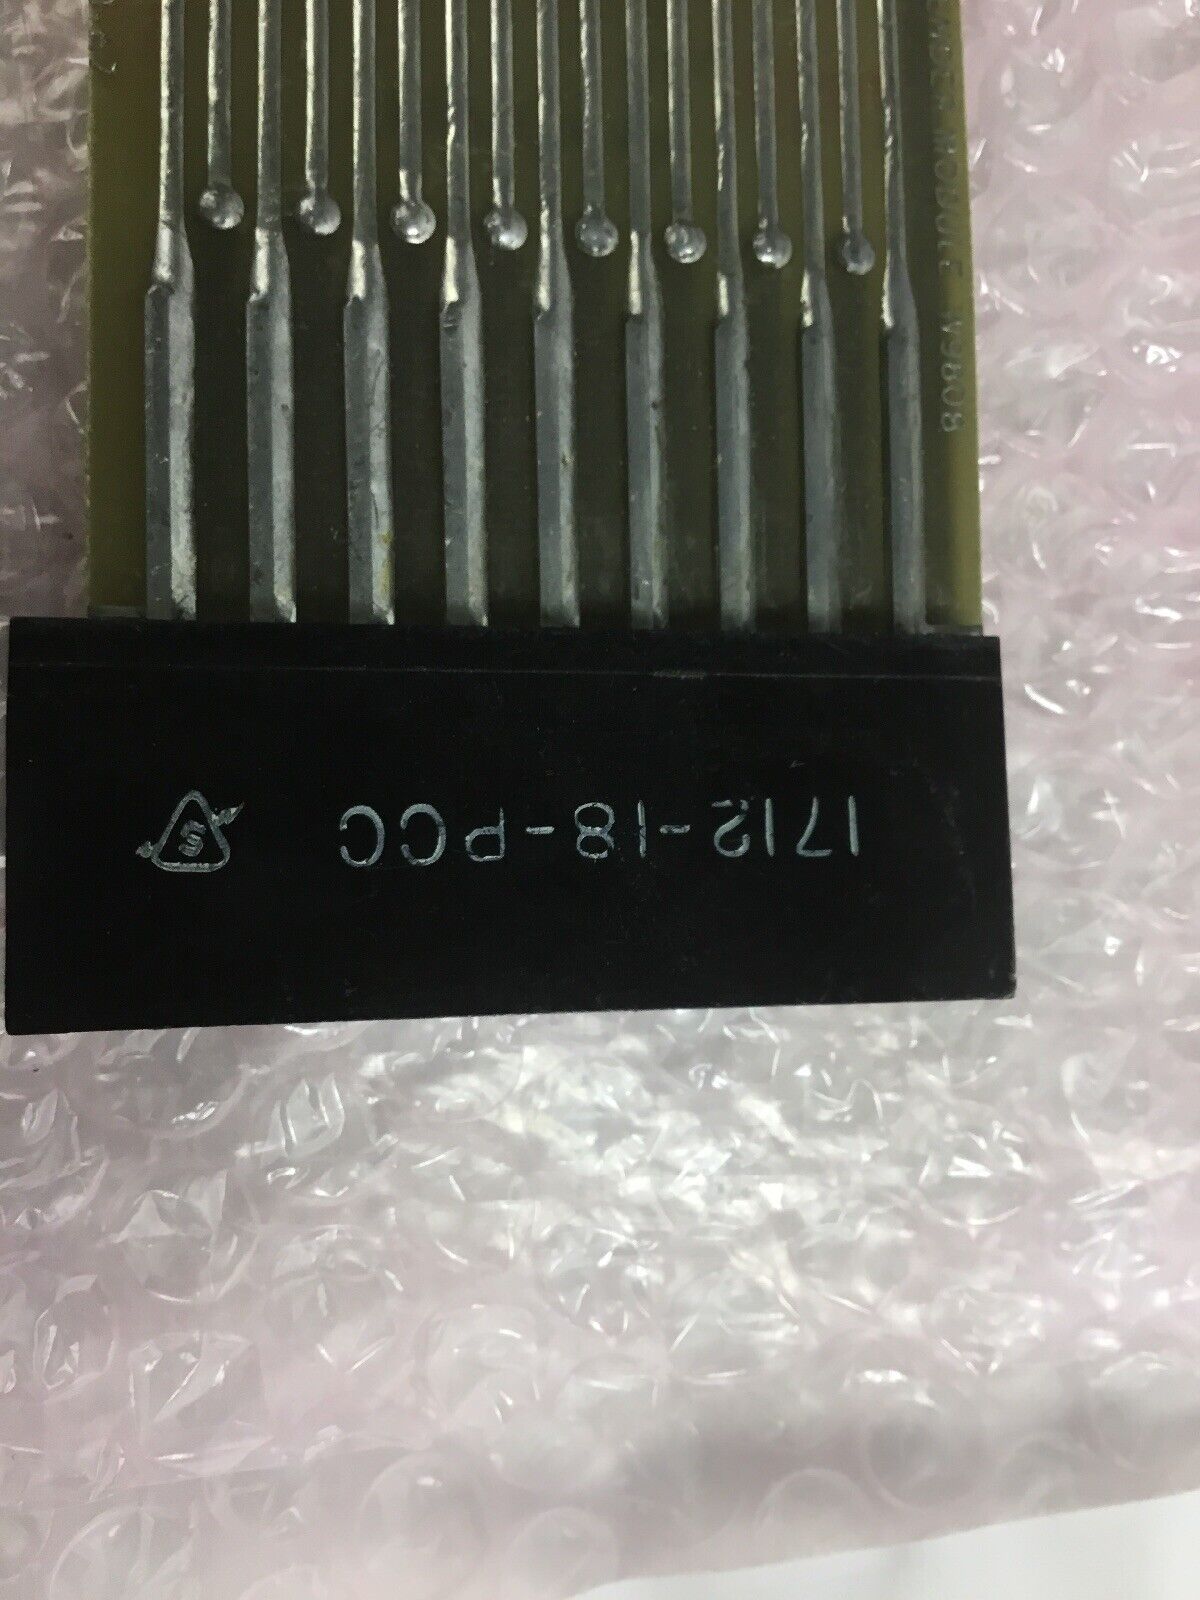 Flip Chip W980B PC Board Circuit Extender w/1712-18-PCC Connection